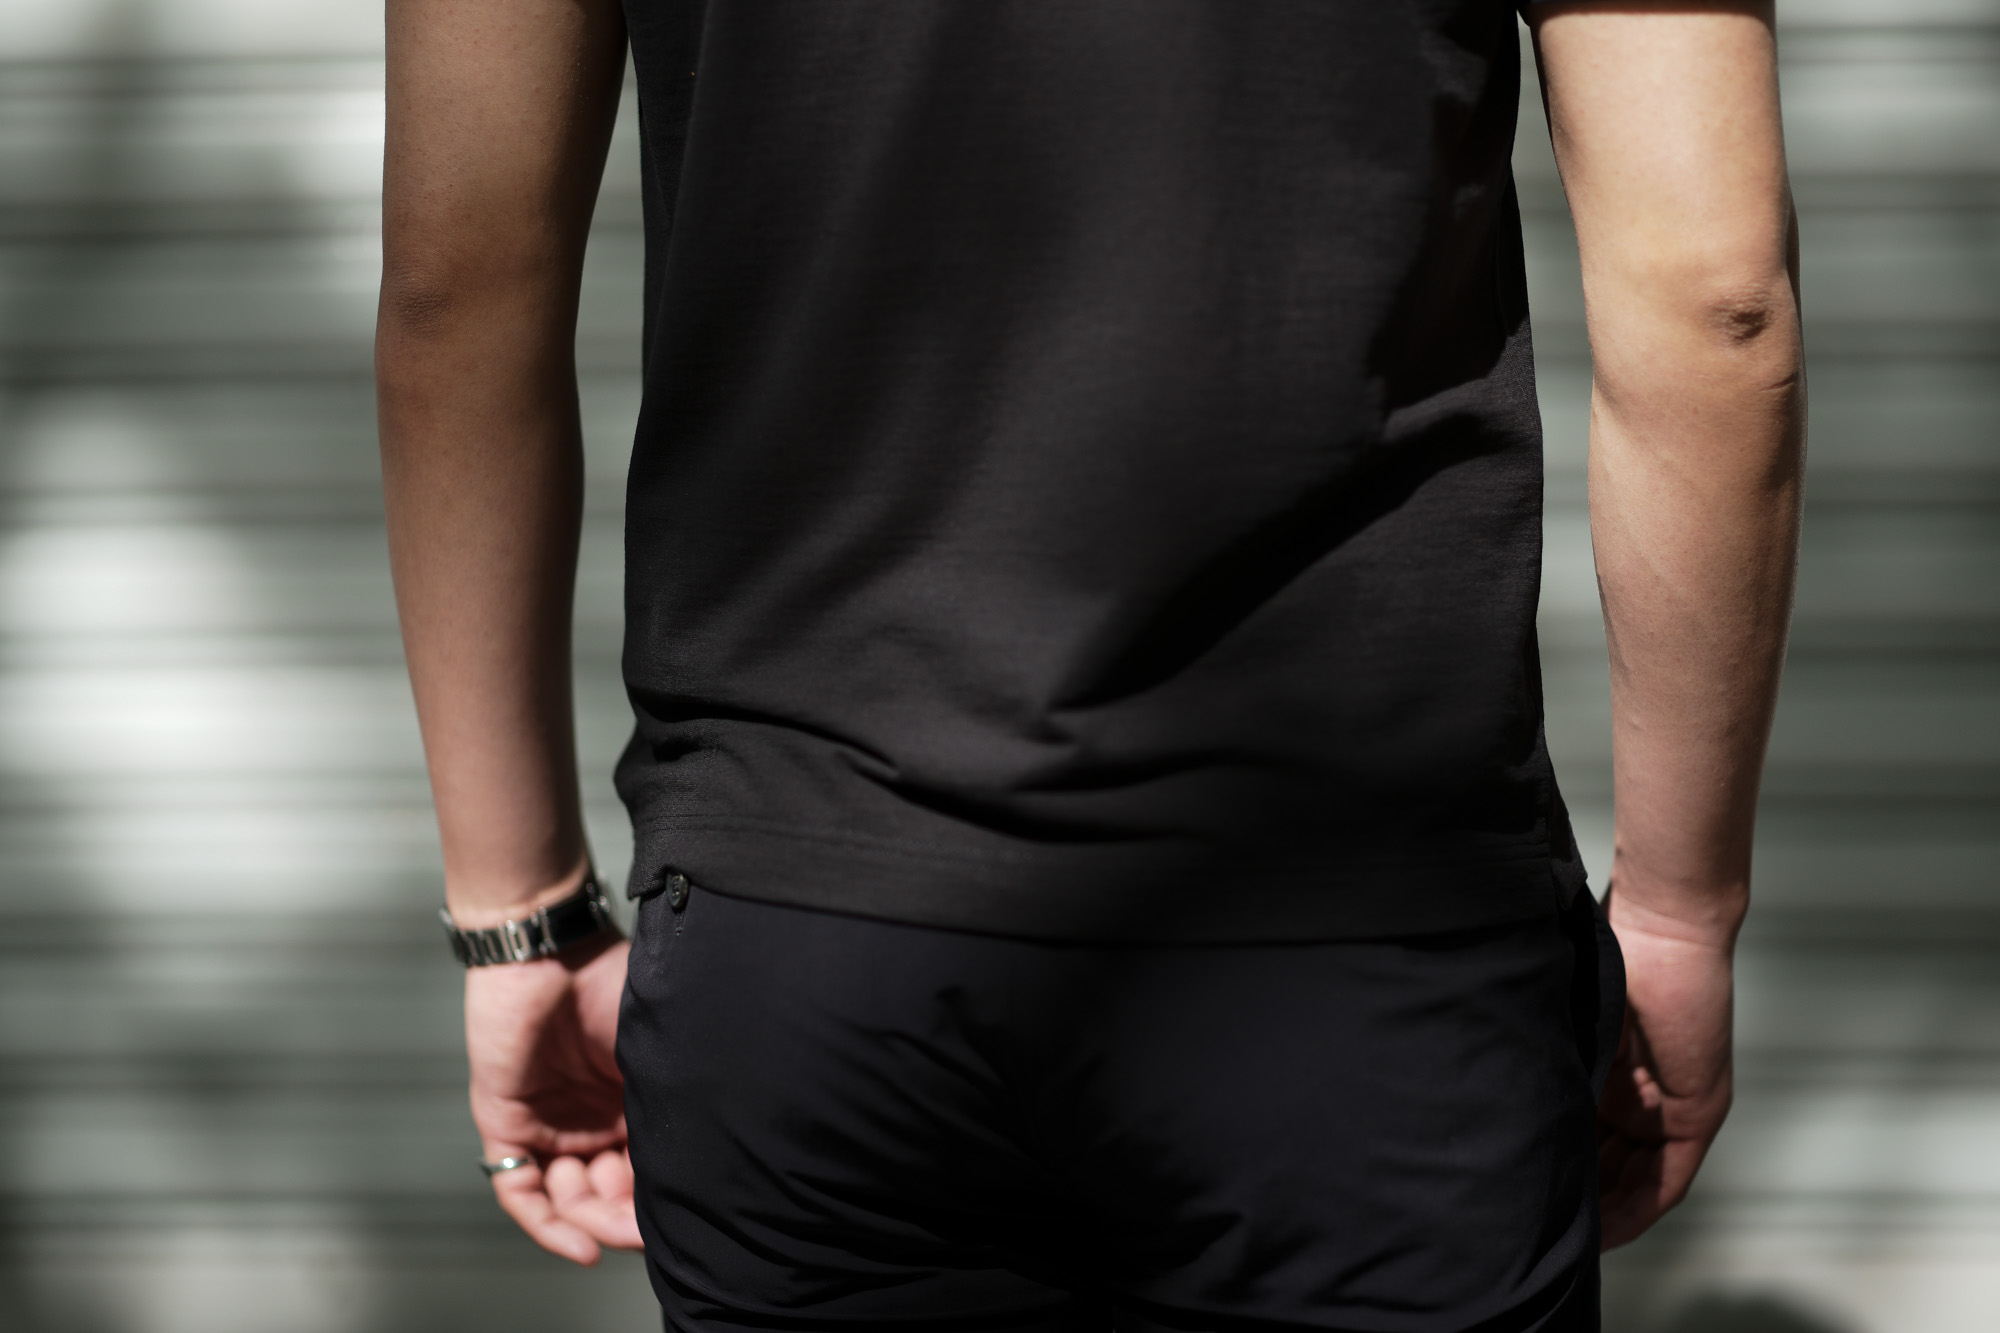 ZANONE(ザノーネ) Polo Shirt ice cotton アイスコットン ポロシャツ BLACK (ブラック・Z0015) made in italy (イタリア製) 2020春夏新作 愛知 名古屋 altoediritto アルトエデリット